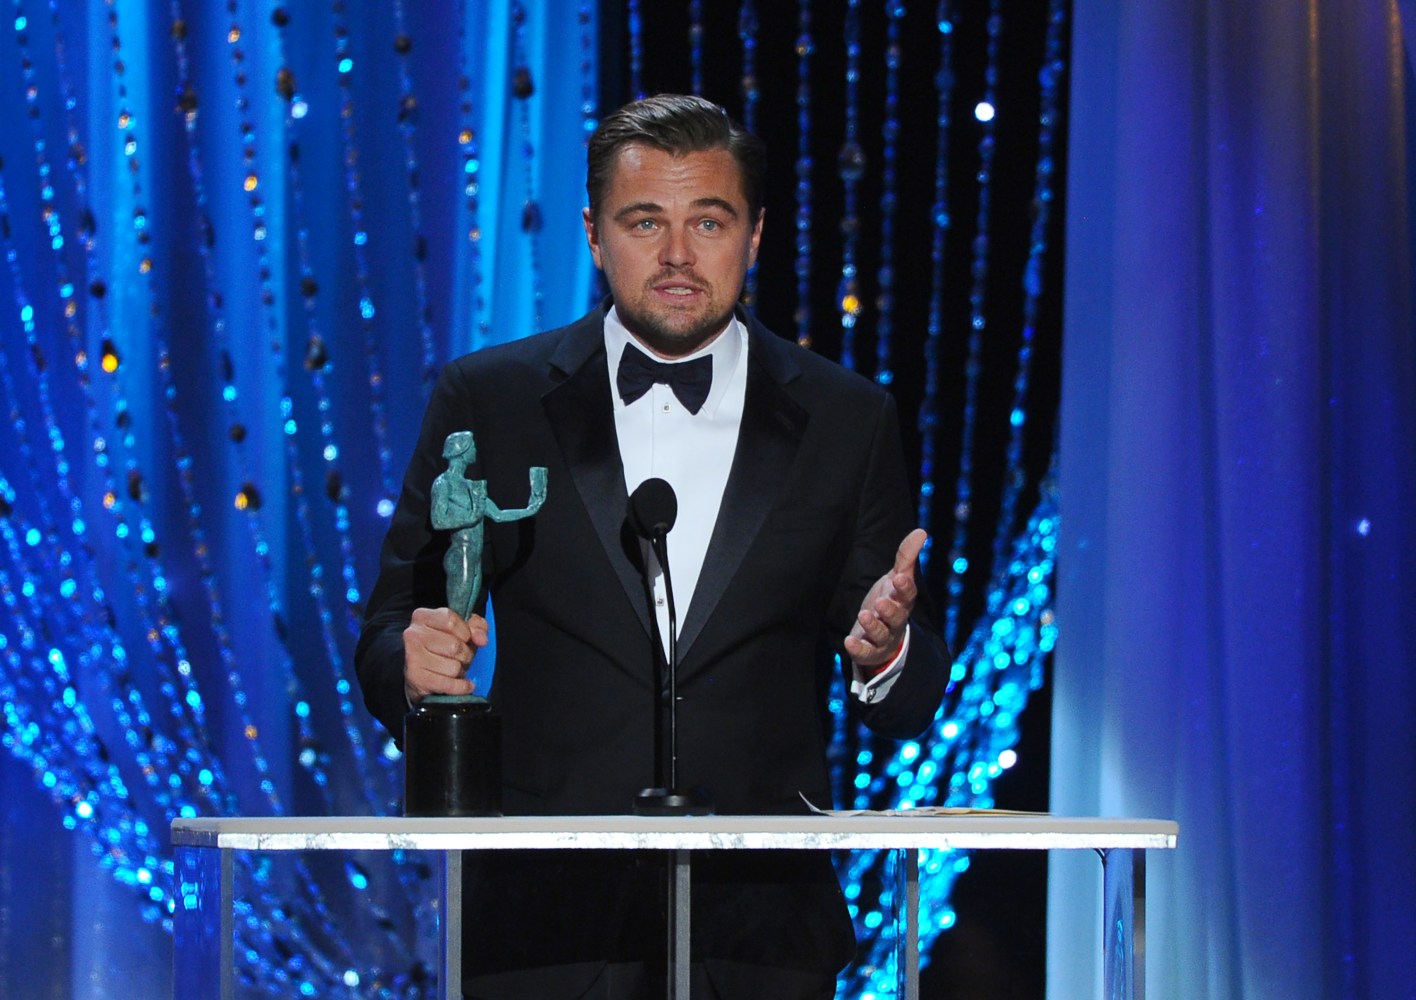 Screen Actors Guild Awards: 'Spotlight' Cast Takes Top Prize - NBC News